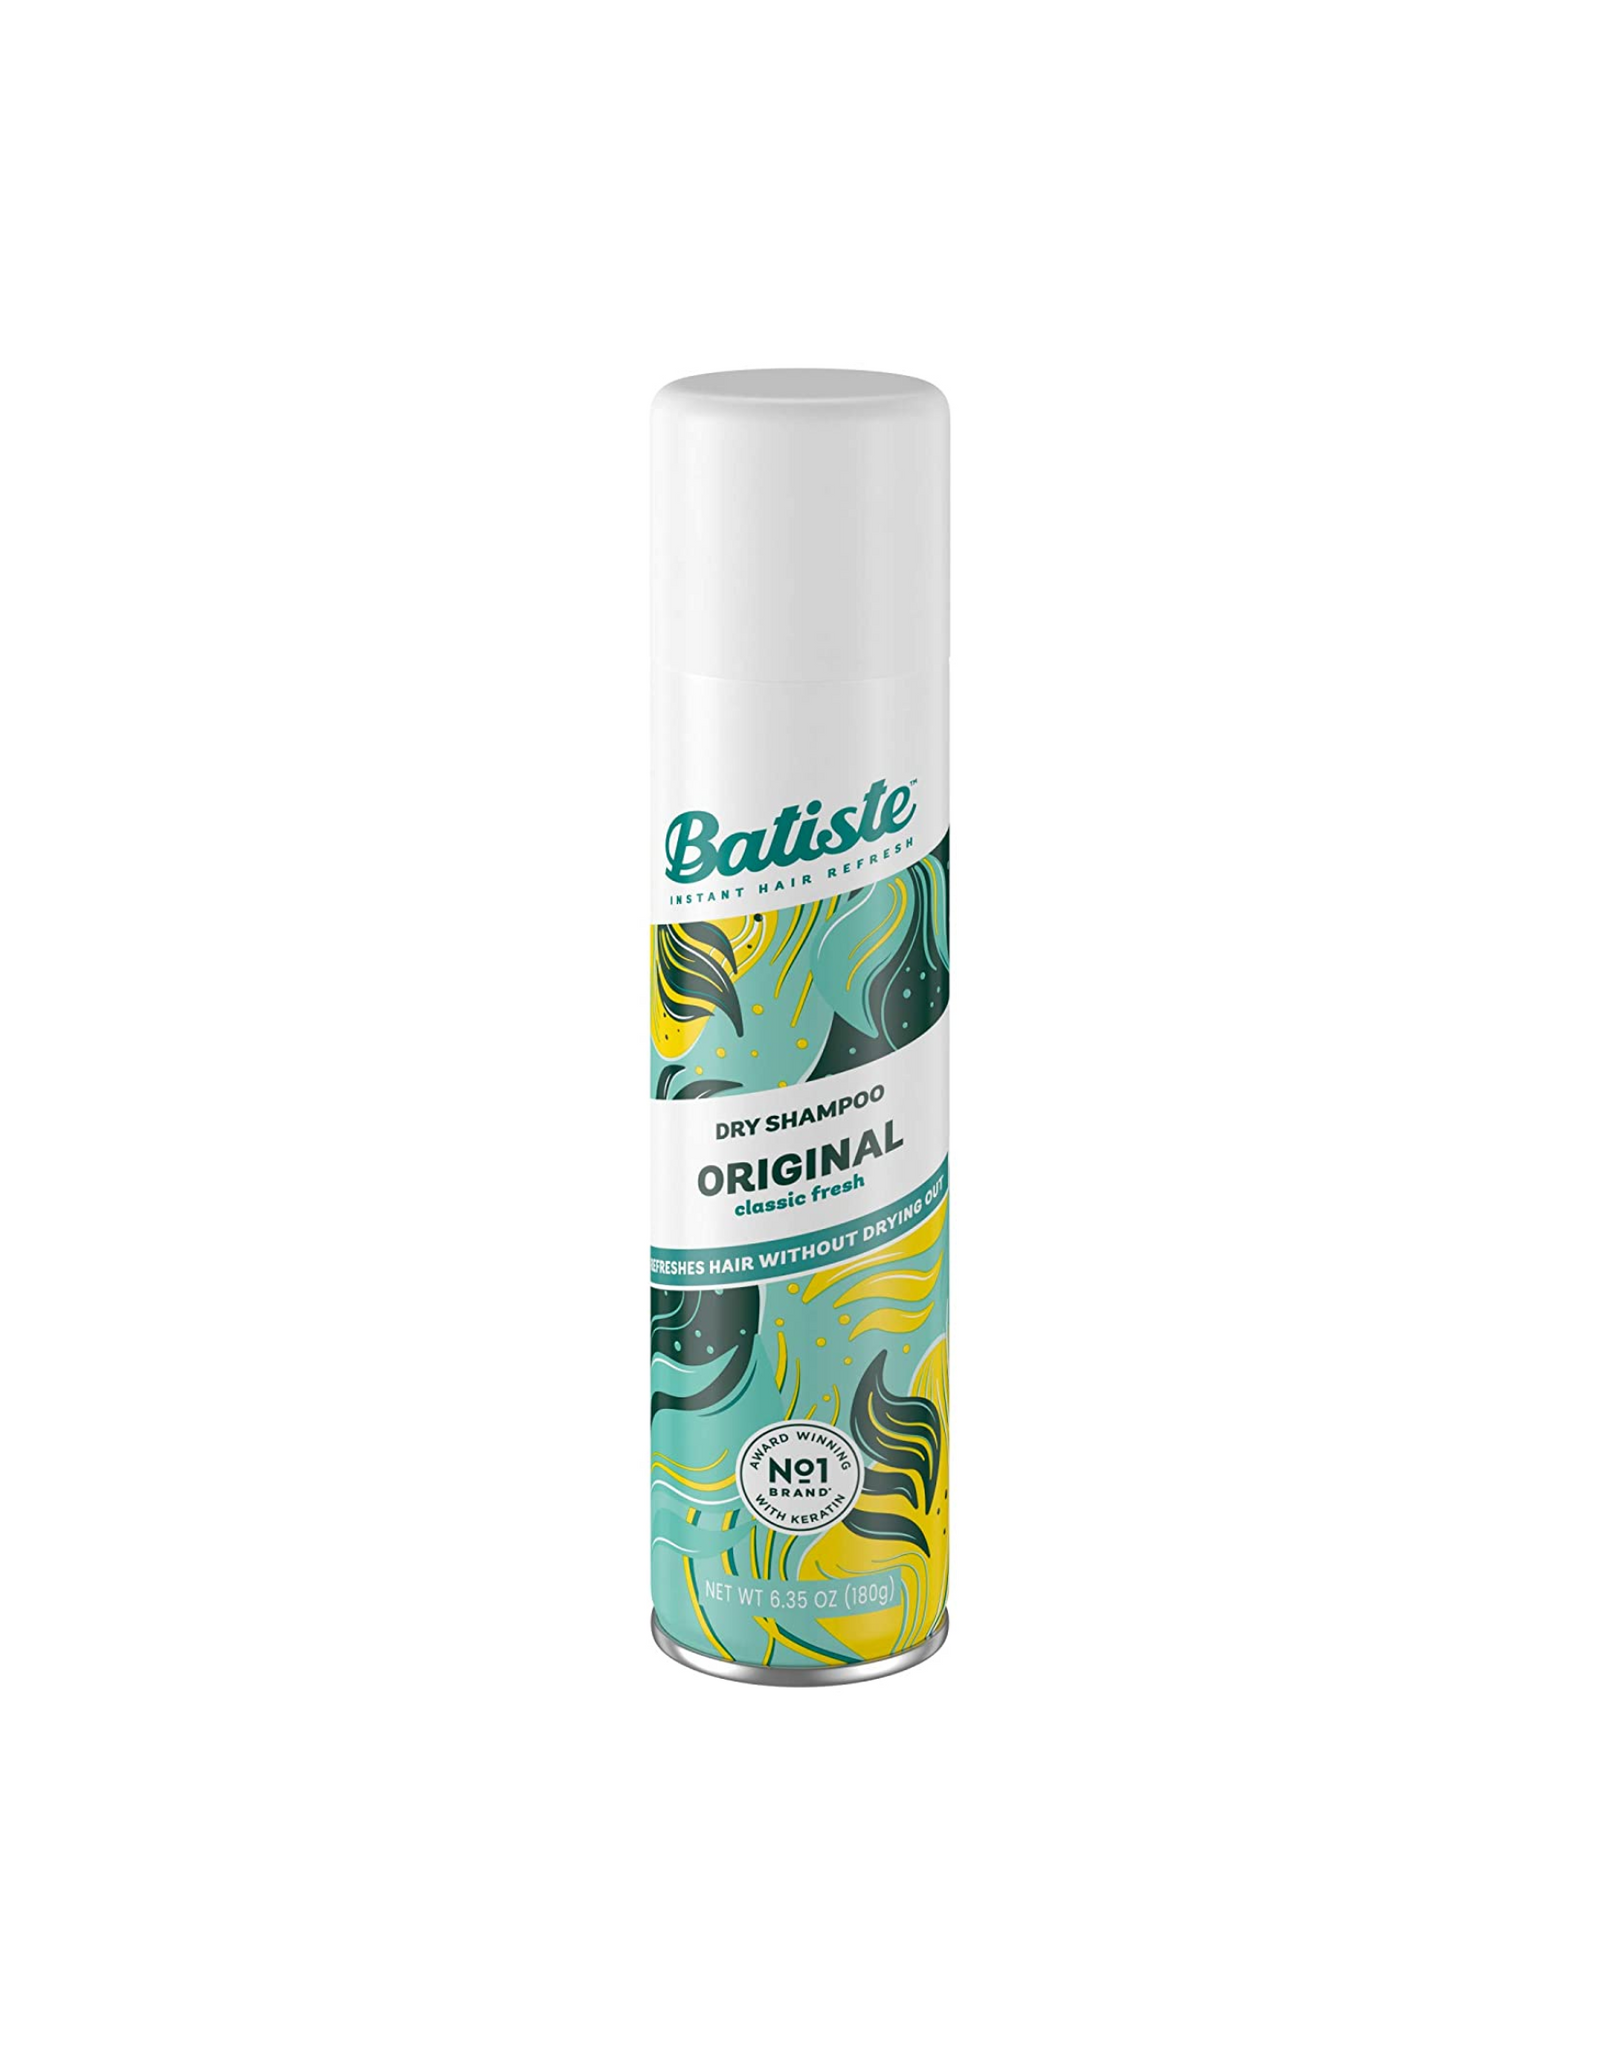 Batiste Dry Shampoo, Original Fragrance, Refresh Hair and Absorb Oil Between Washes, 6.35 fl oz